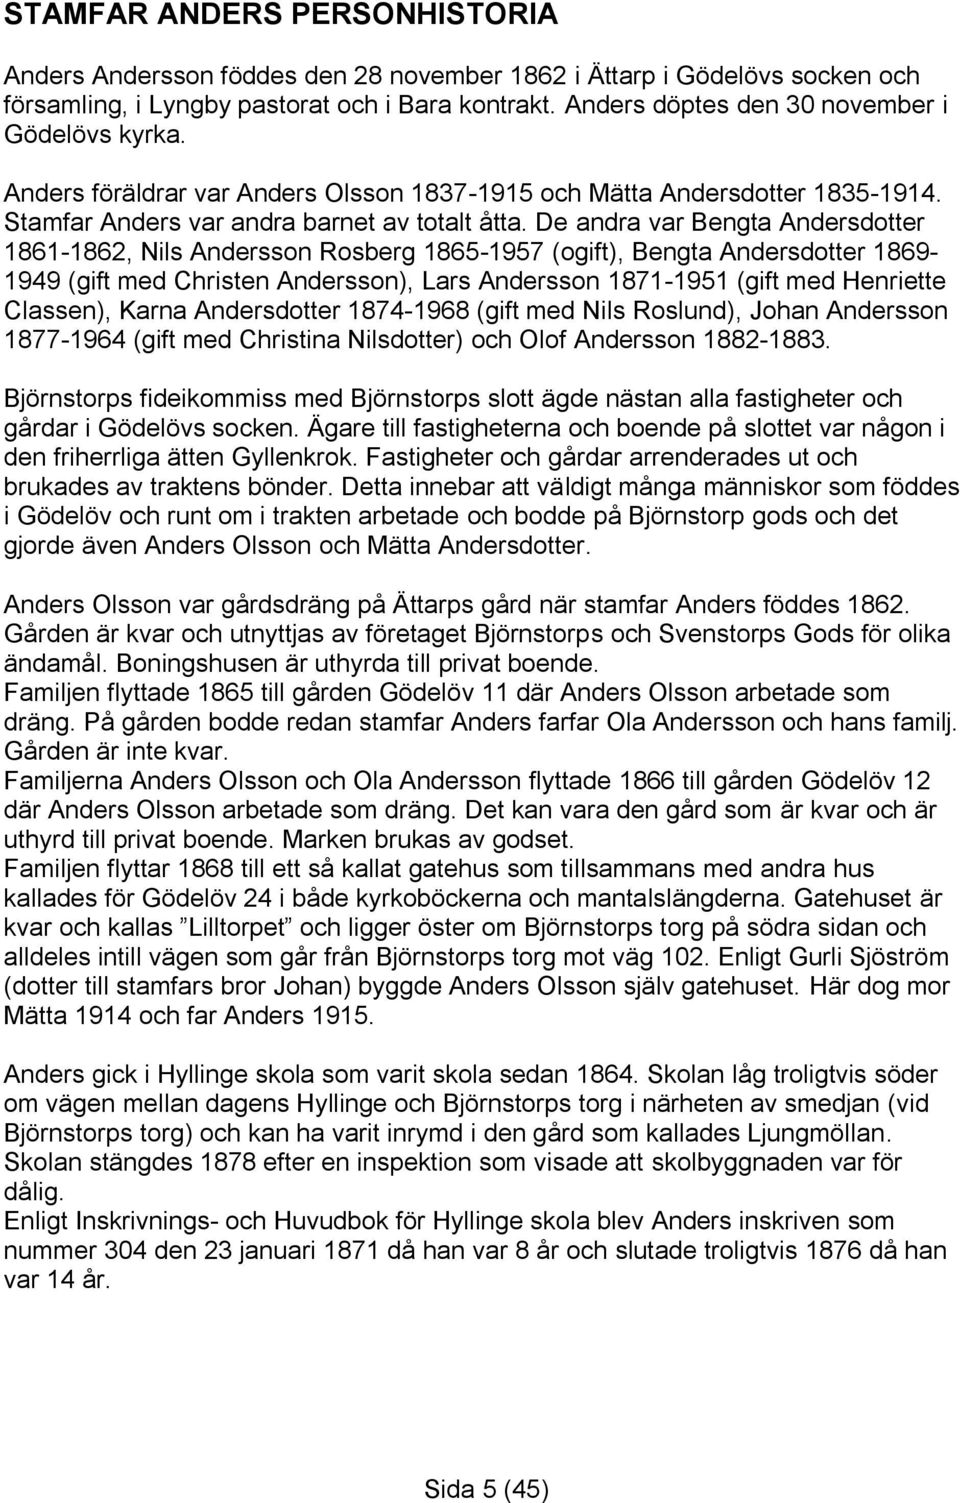 De andra var Bengta Andersdotter 1861-1862, Nils Andersson Rosberg 1865-1957 (ogift), Bengta Andersdotter 1869-1949 (gift med Christen Andersson), Lars Andersson 1871-1951 (gift med Henriette